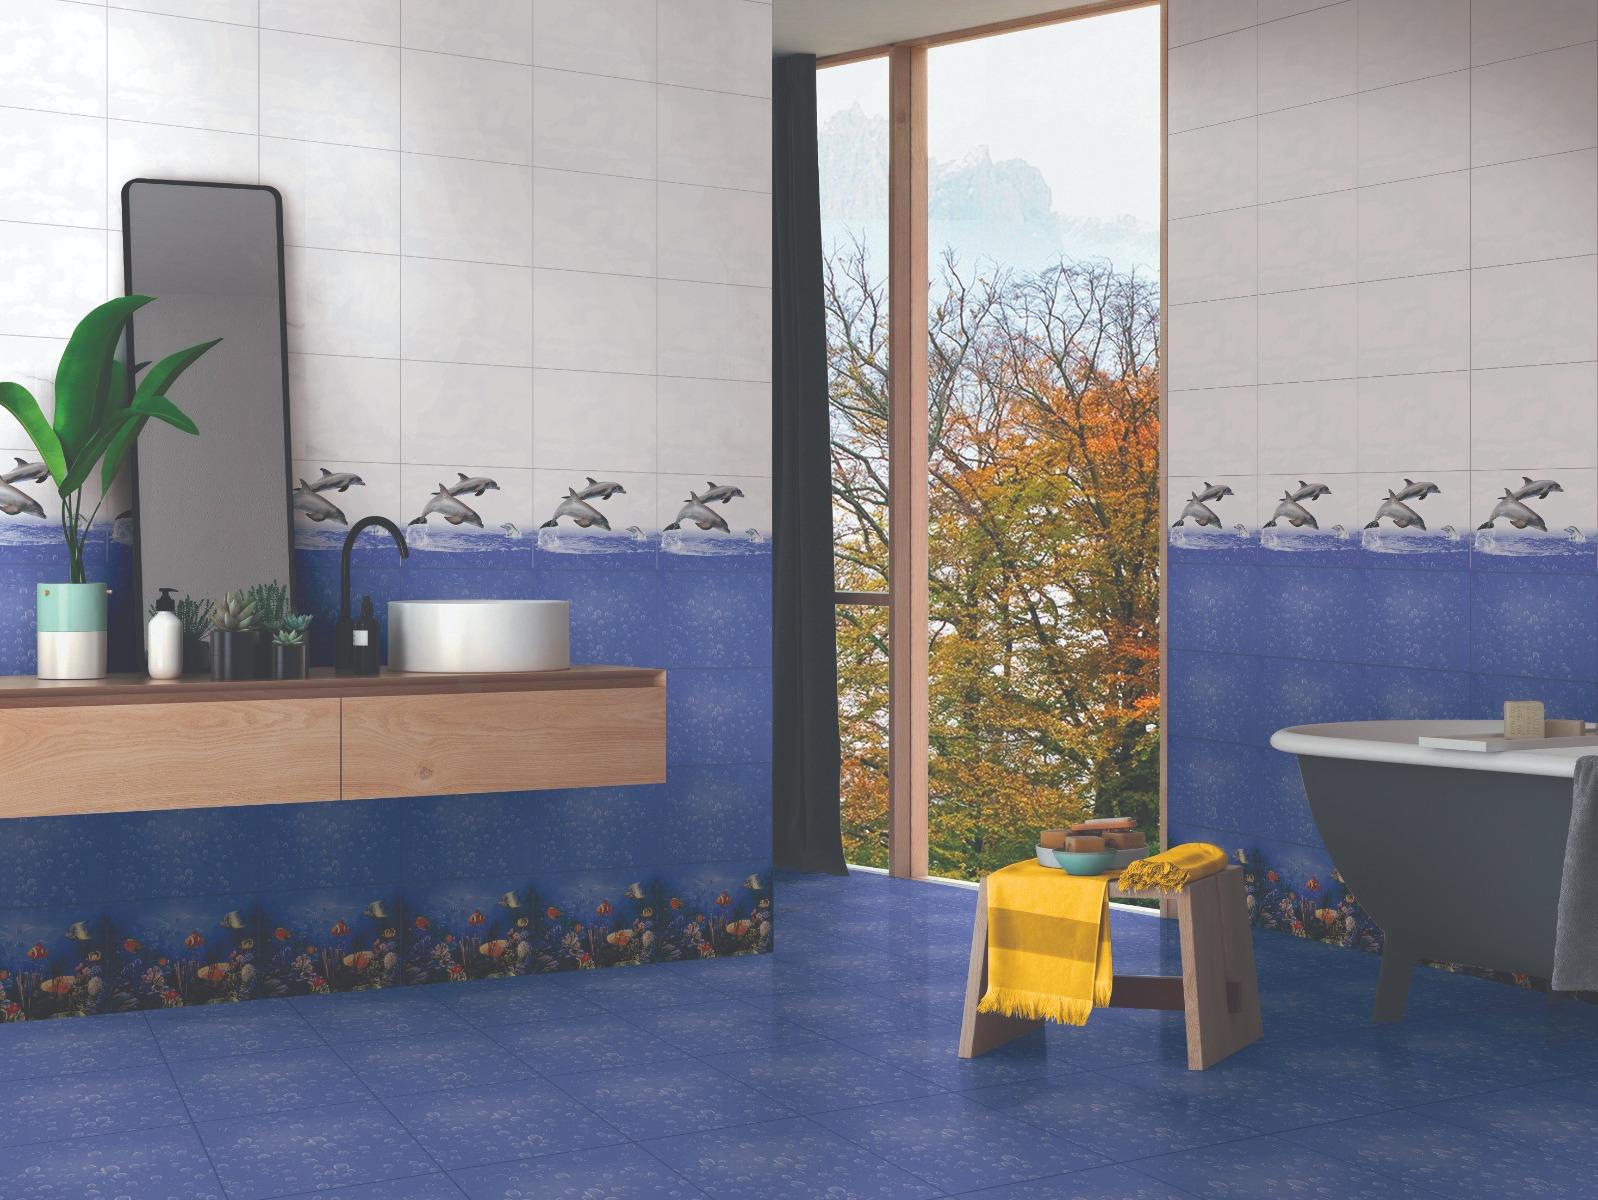 Dolphin Tiles for Bathroom Tiles, Accent Tiles